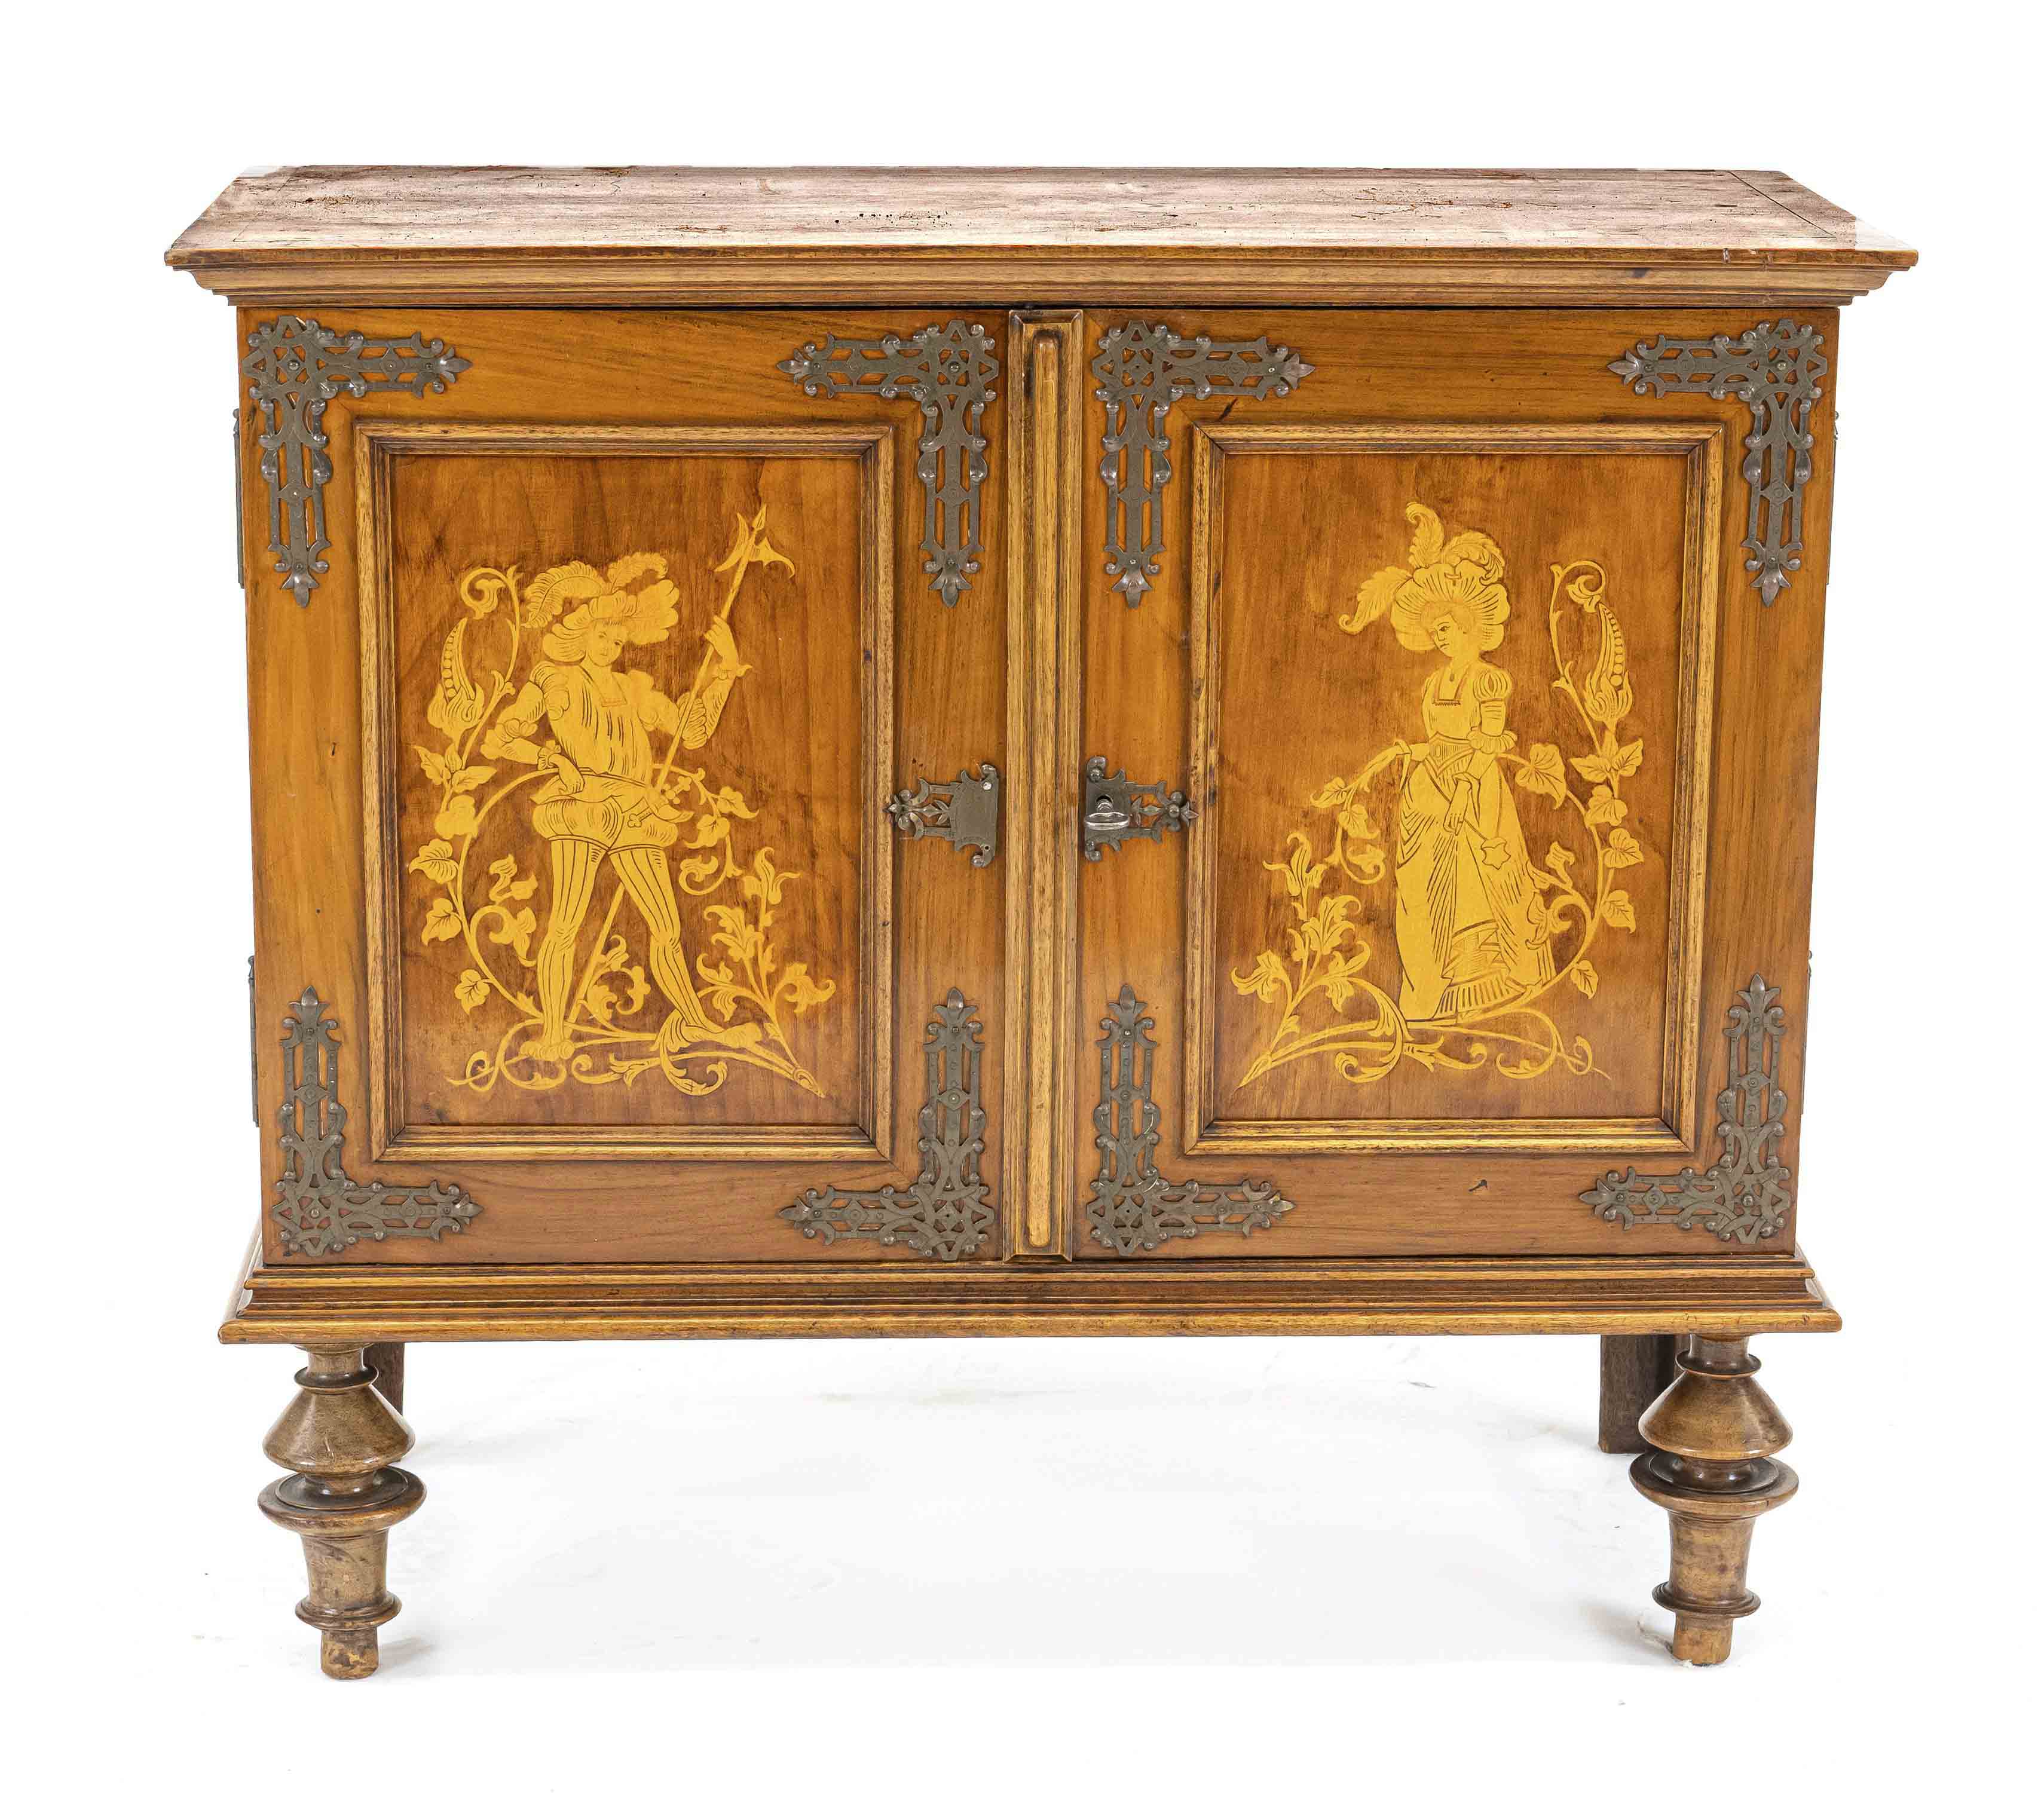 Decorative model cabinet, c. 1900, mahogany, inlaid doors, 55 x 62 x 27 cm - The furniture cannot be